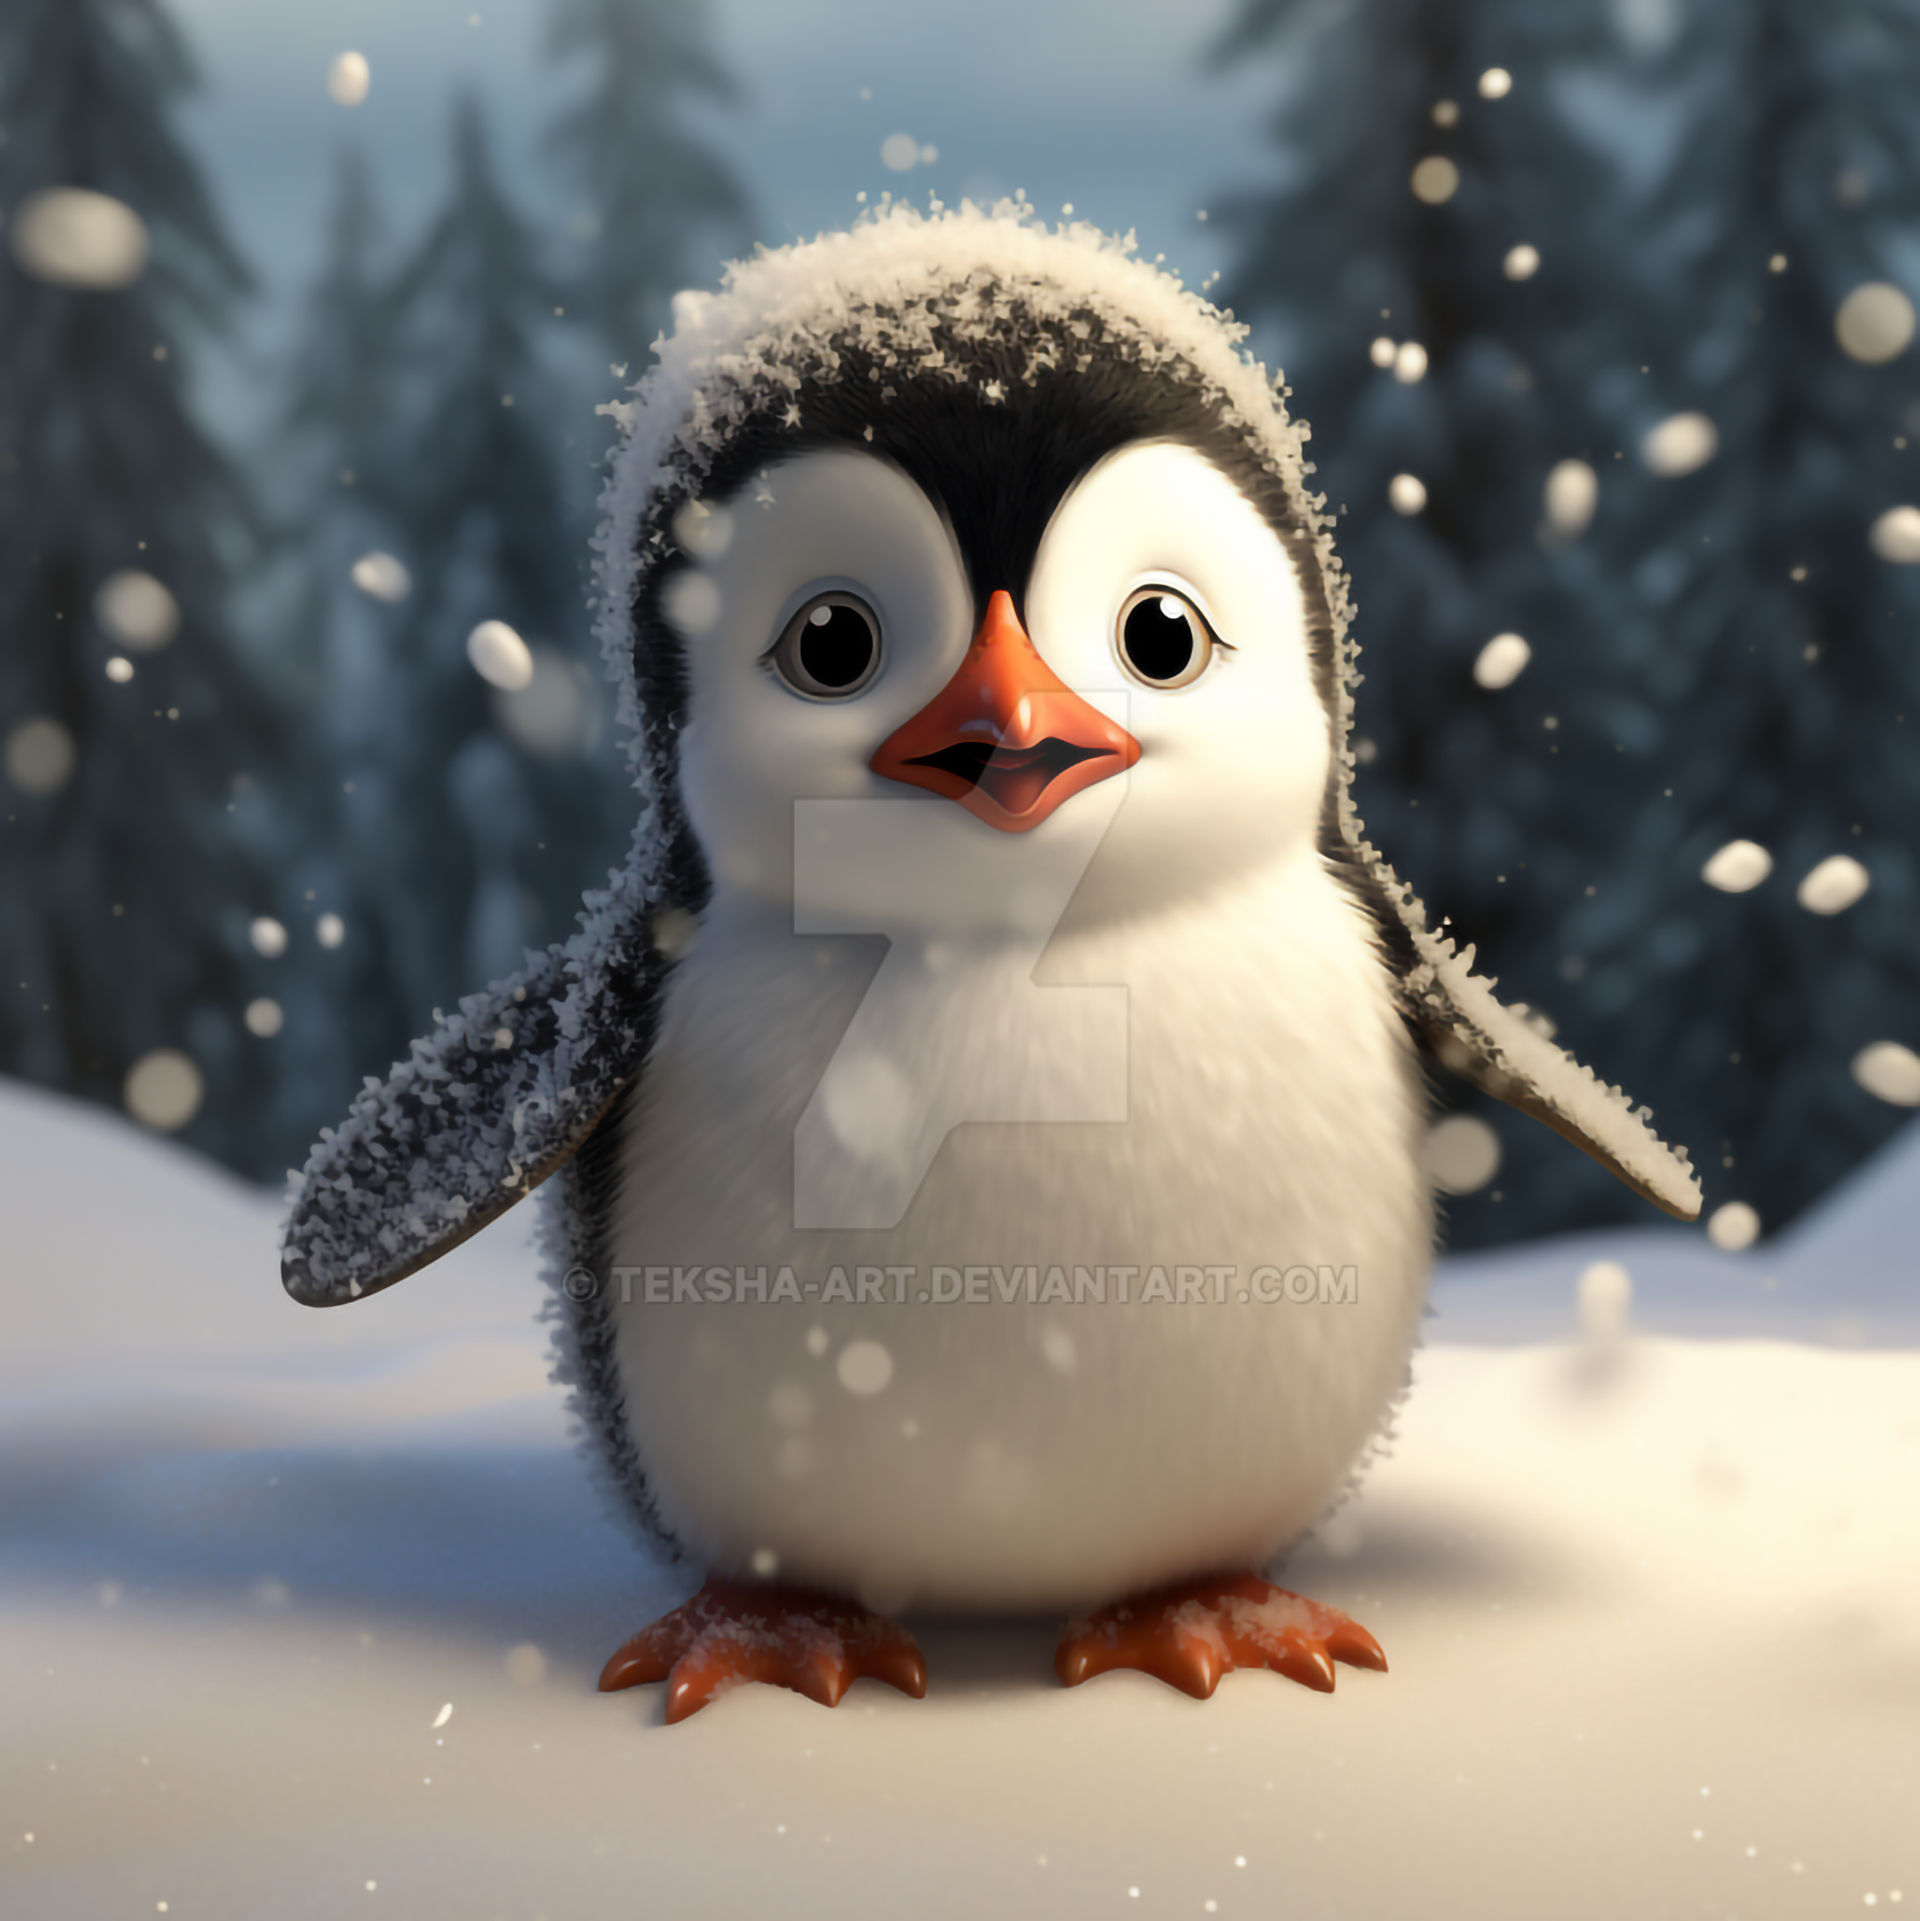 Cute baby penguin by Teksha-art on DeviantArt